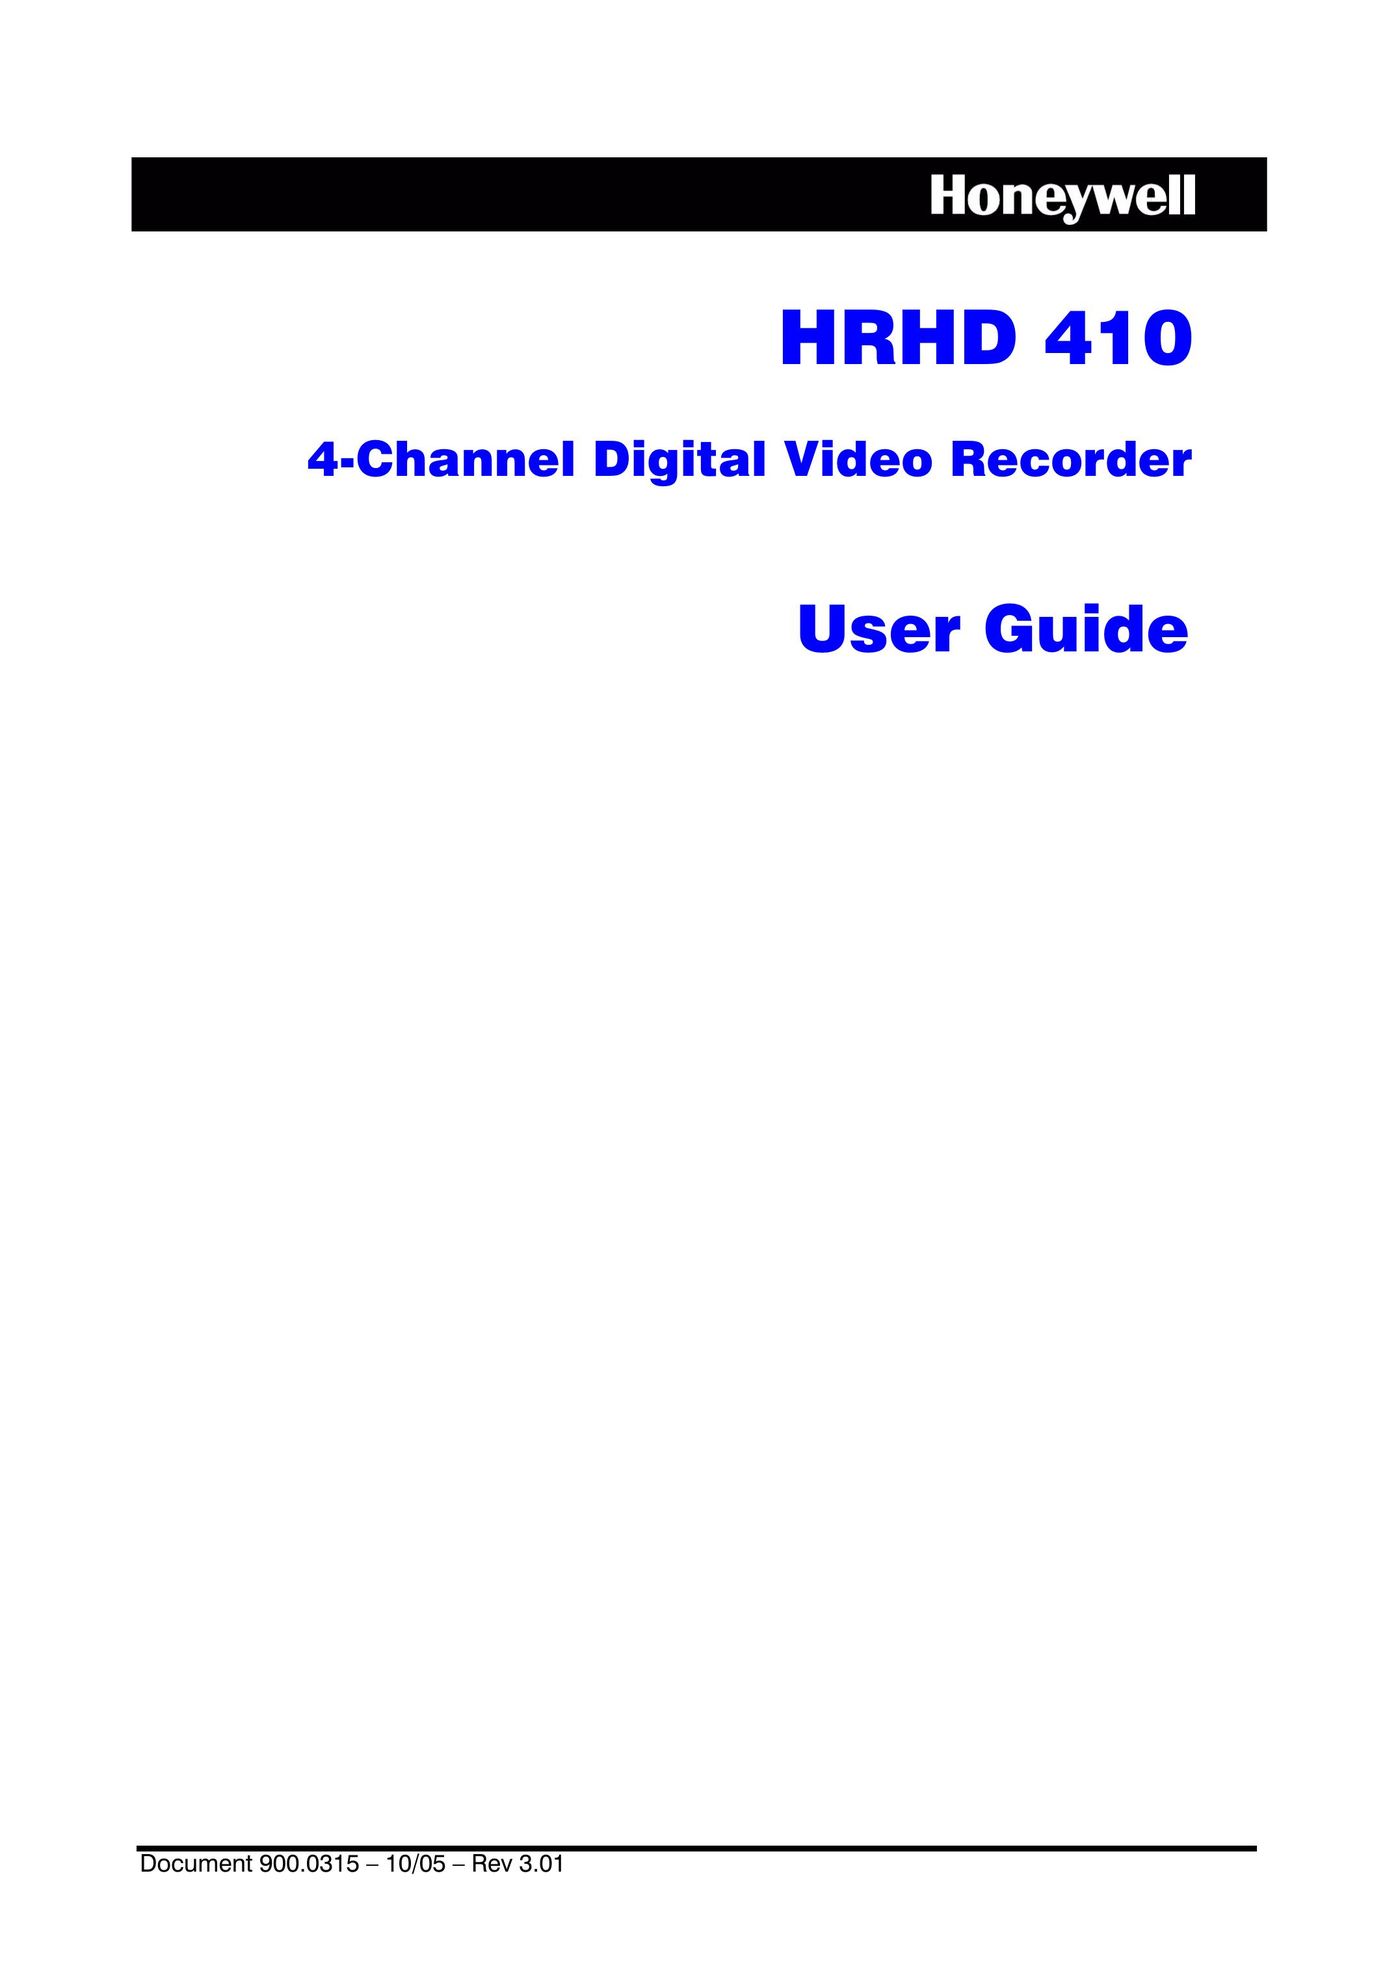 Honeywell HRHD 410 DVR User Manual